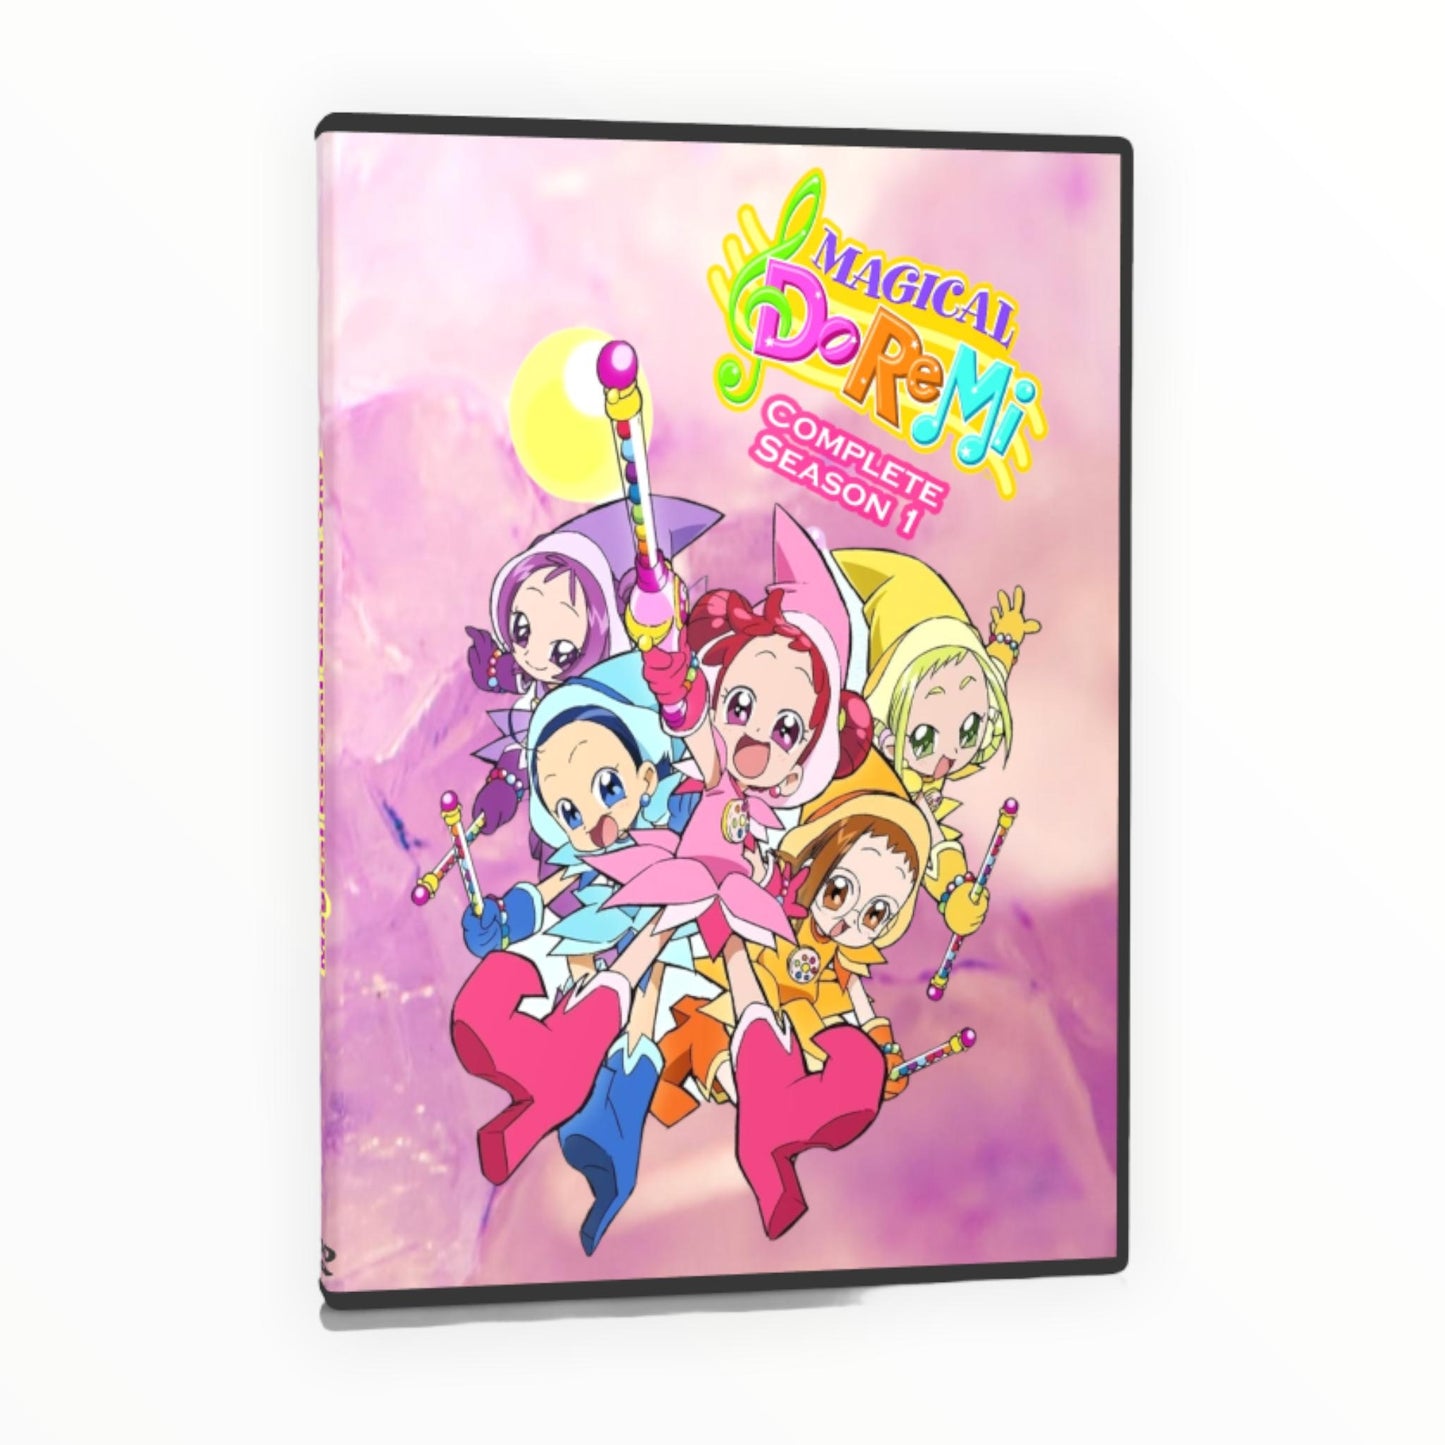 Magical Doremi 4Kids Dubbed Complete Season 1 (6 DVD Set)